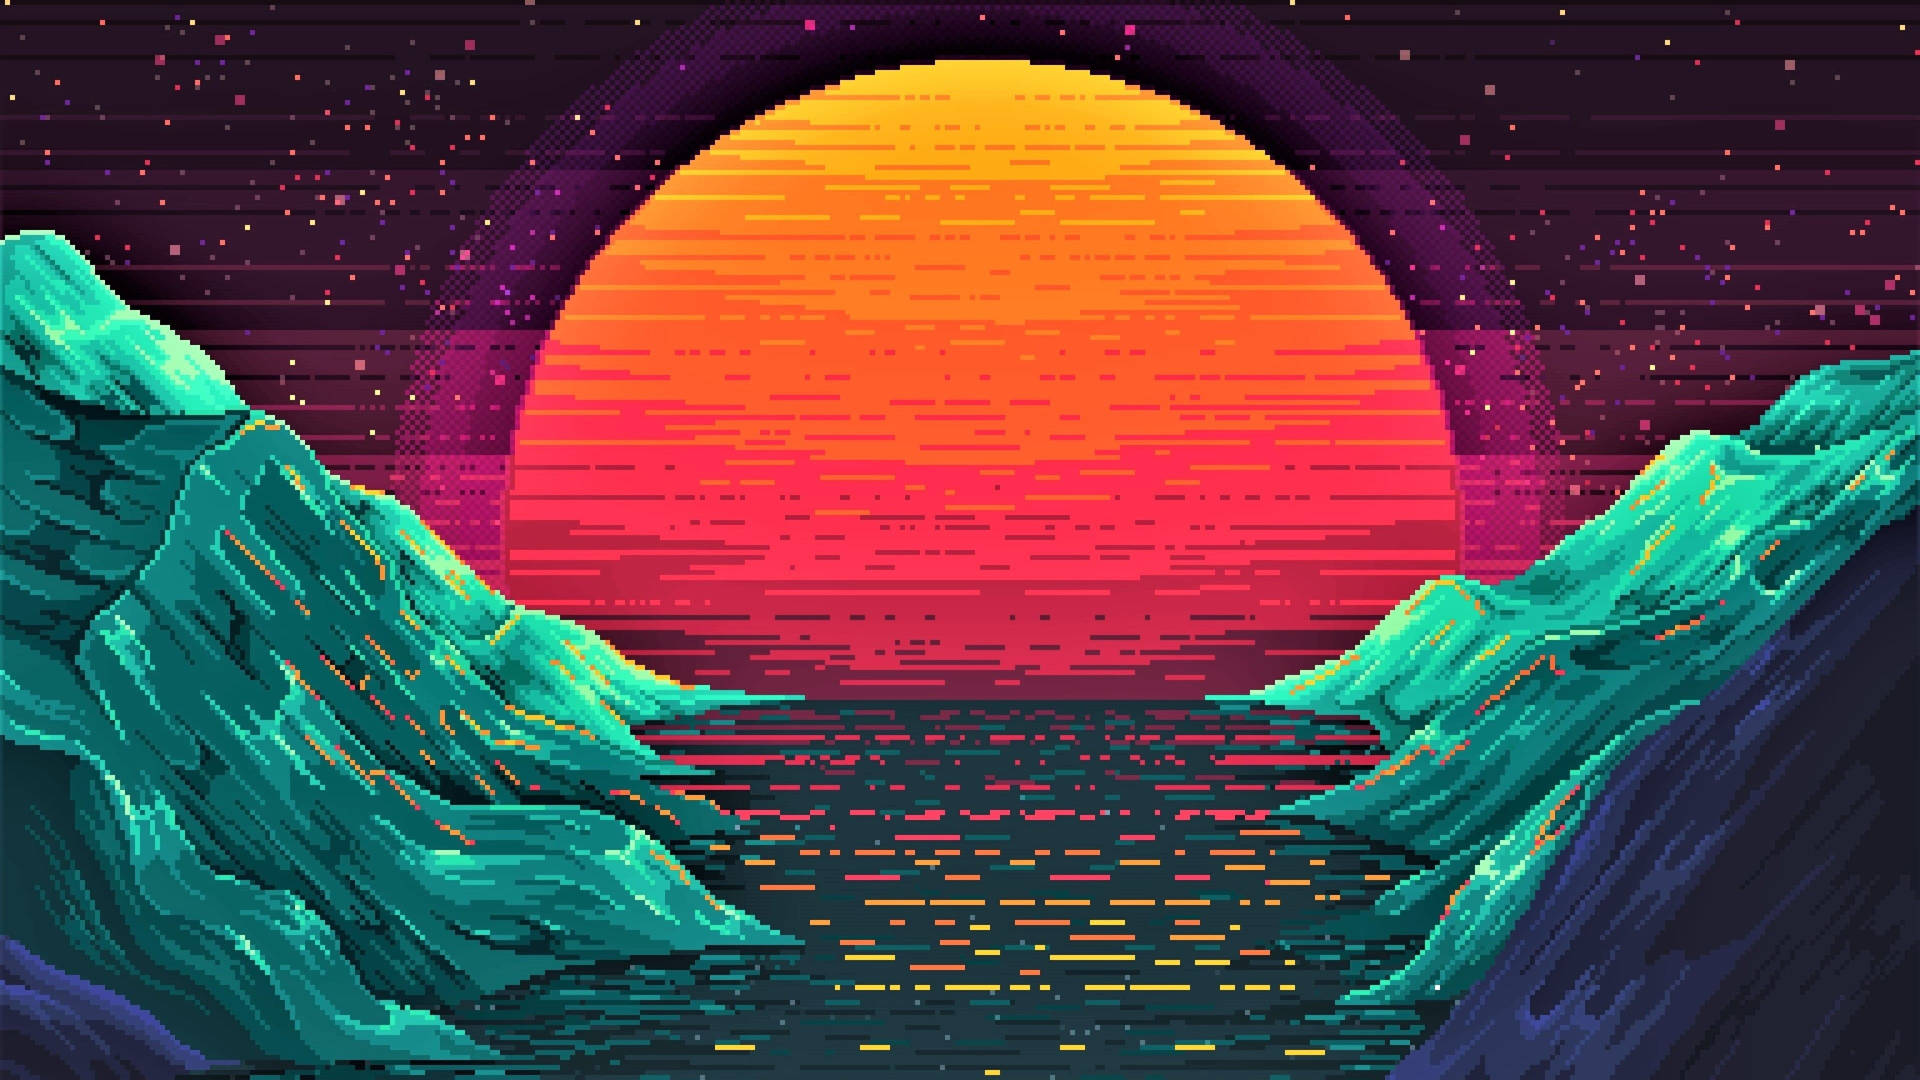 Sunset Pixel Design wallpaper